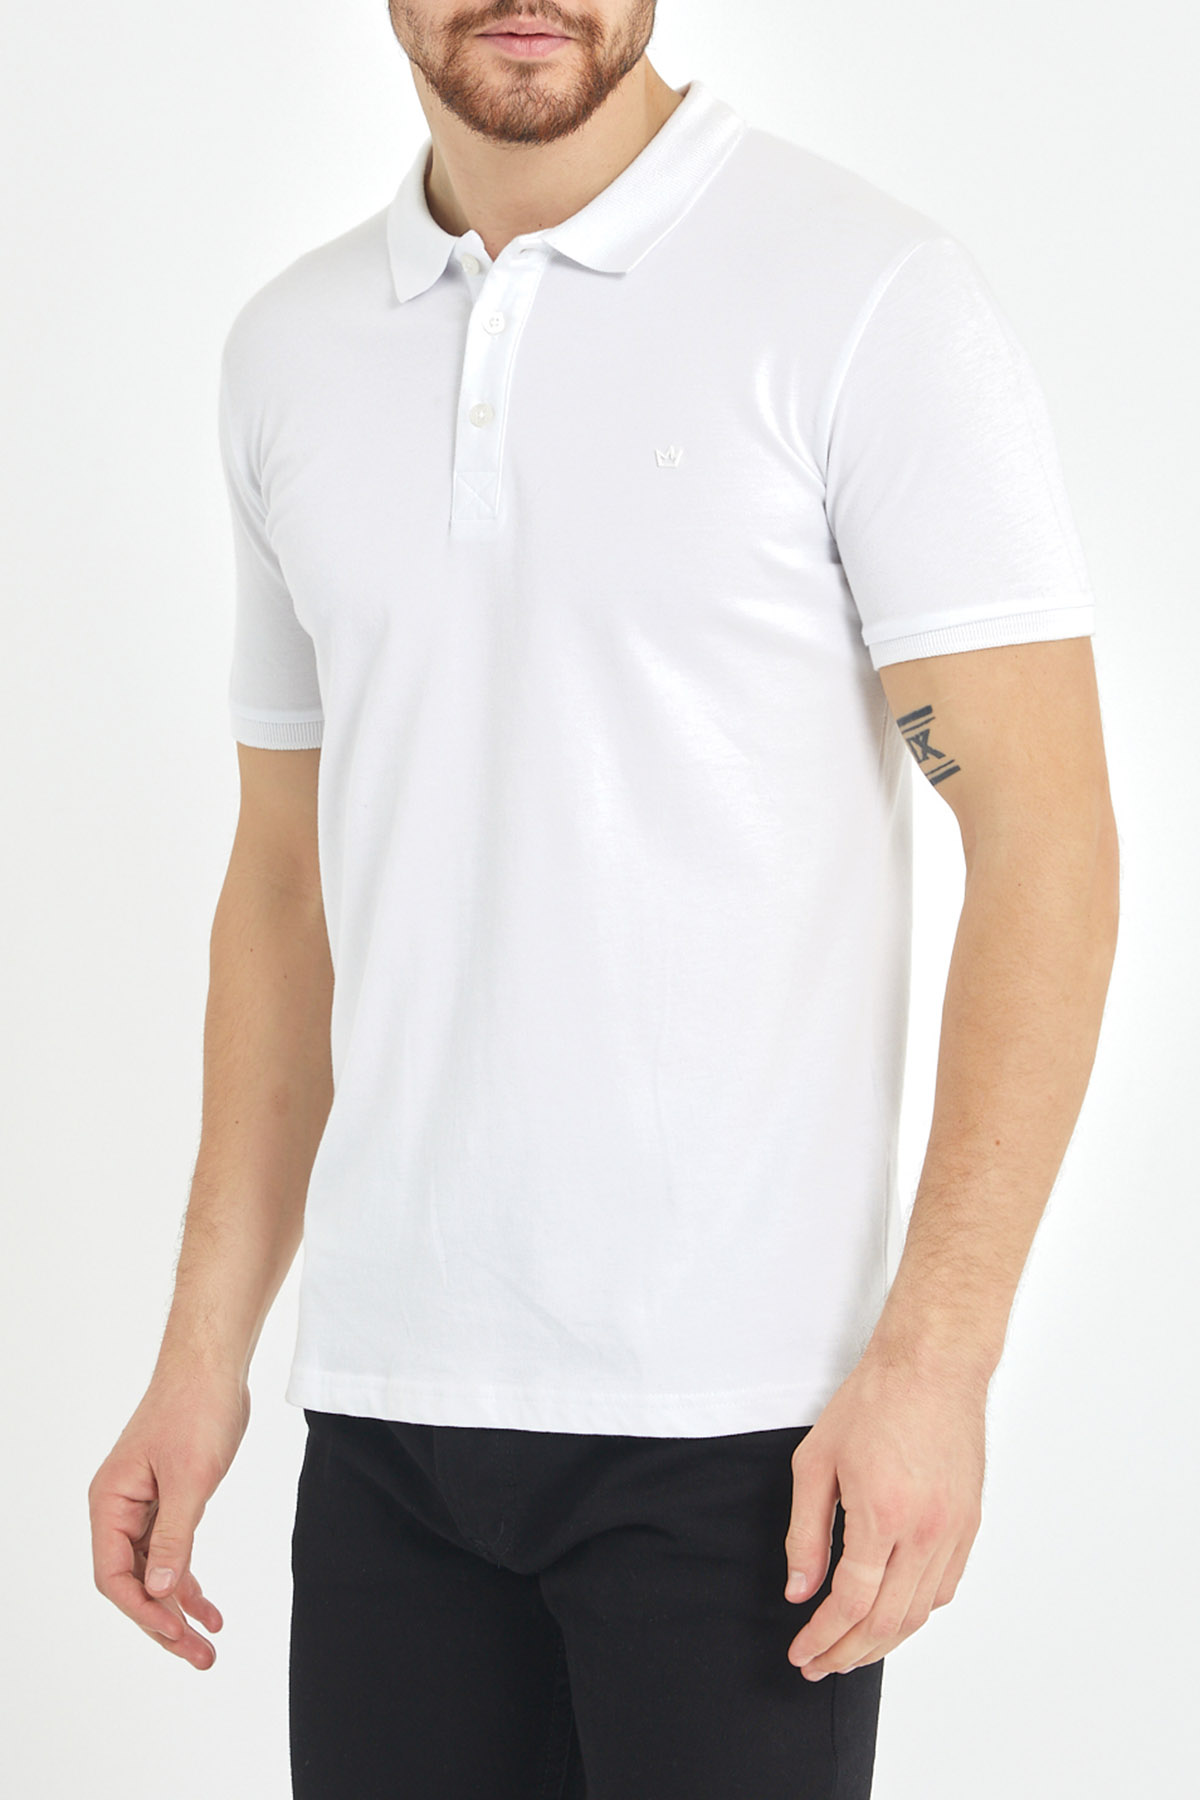 XHAN - Beyaz Polo Yaka T-Shirt 1KXE1-44488-01